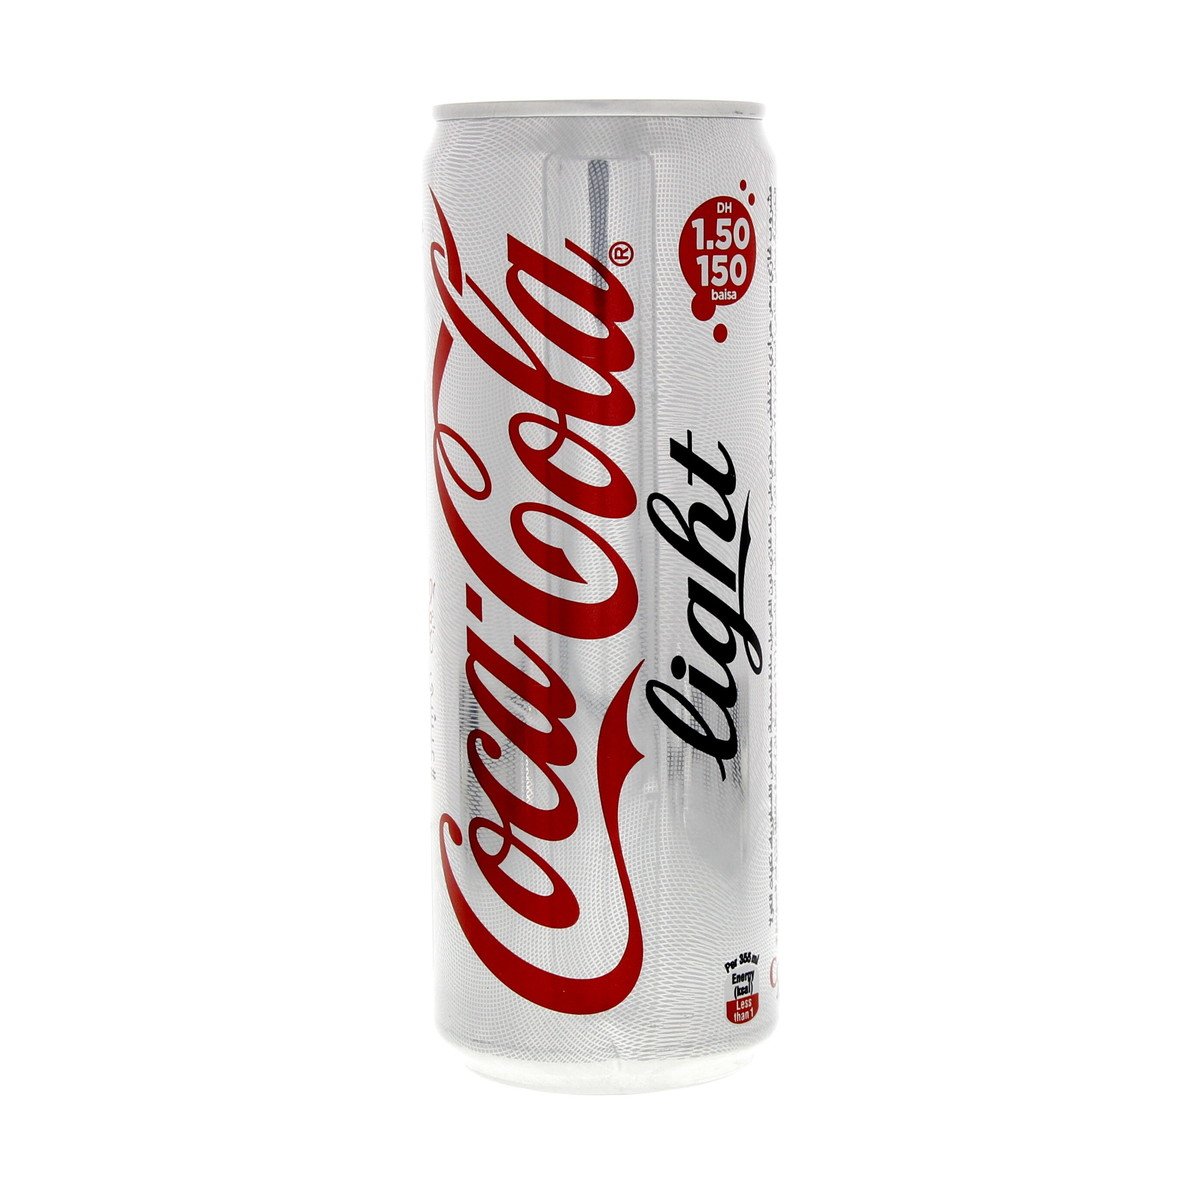 Coca-Cola Light Can 12 x 355 ml